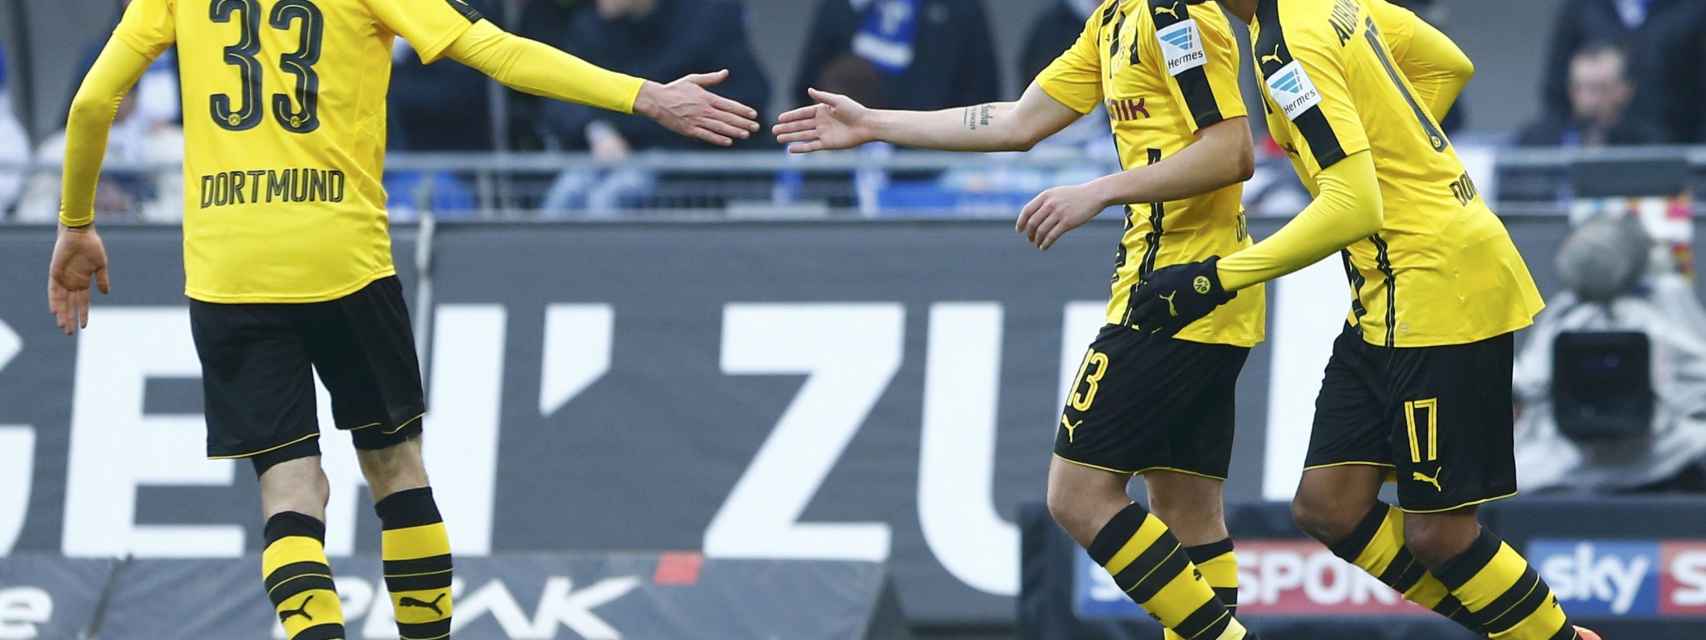 Jugadores del Borussia Dortmund celebran un gol.